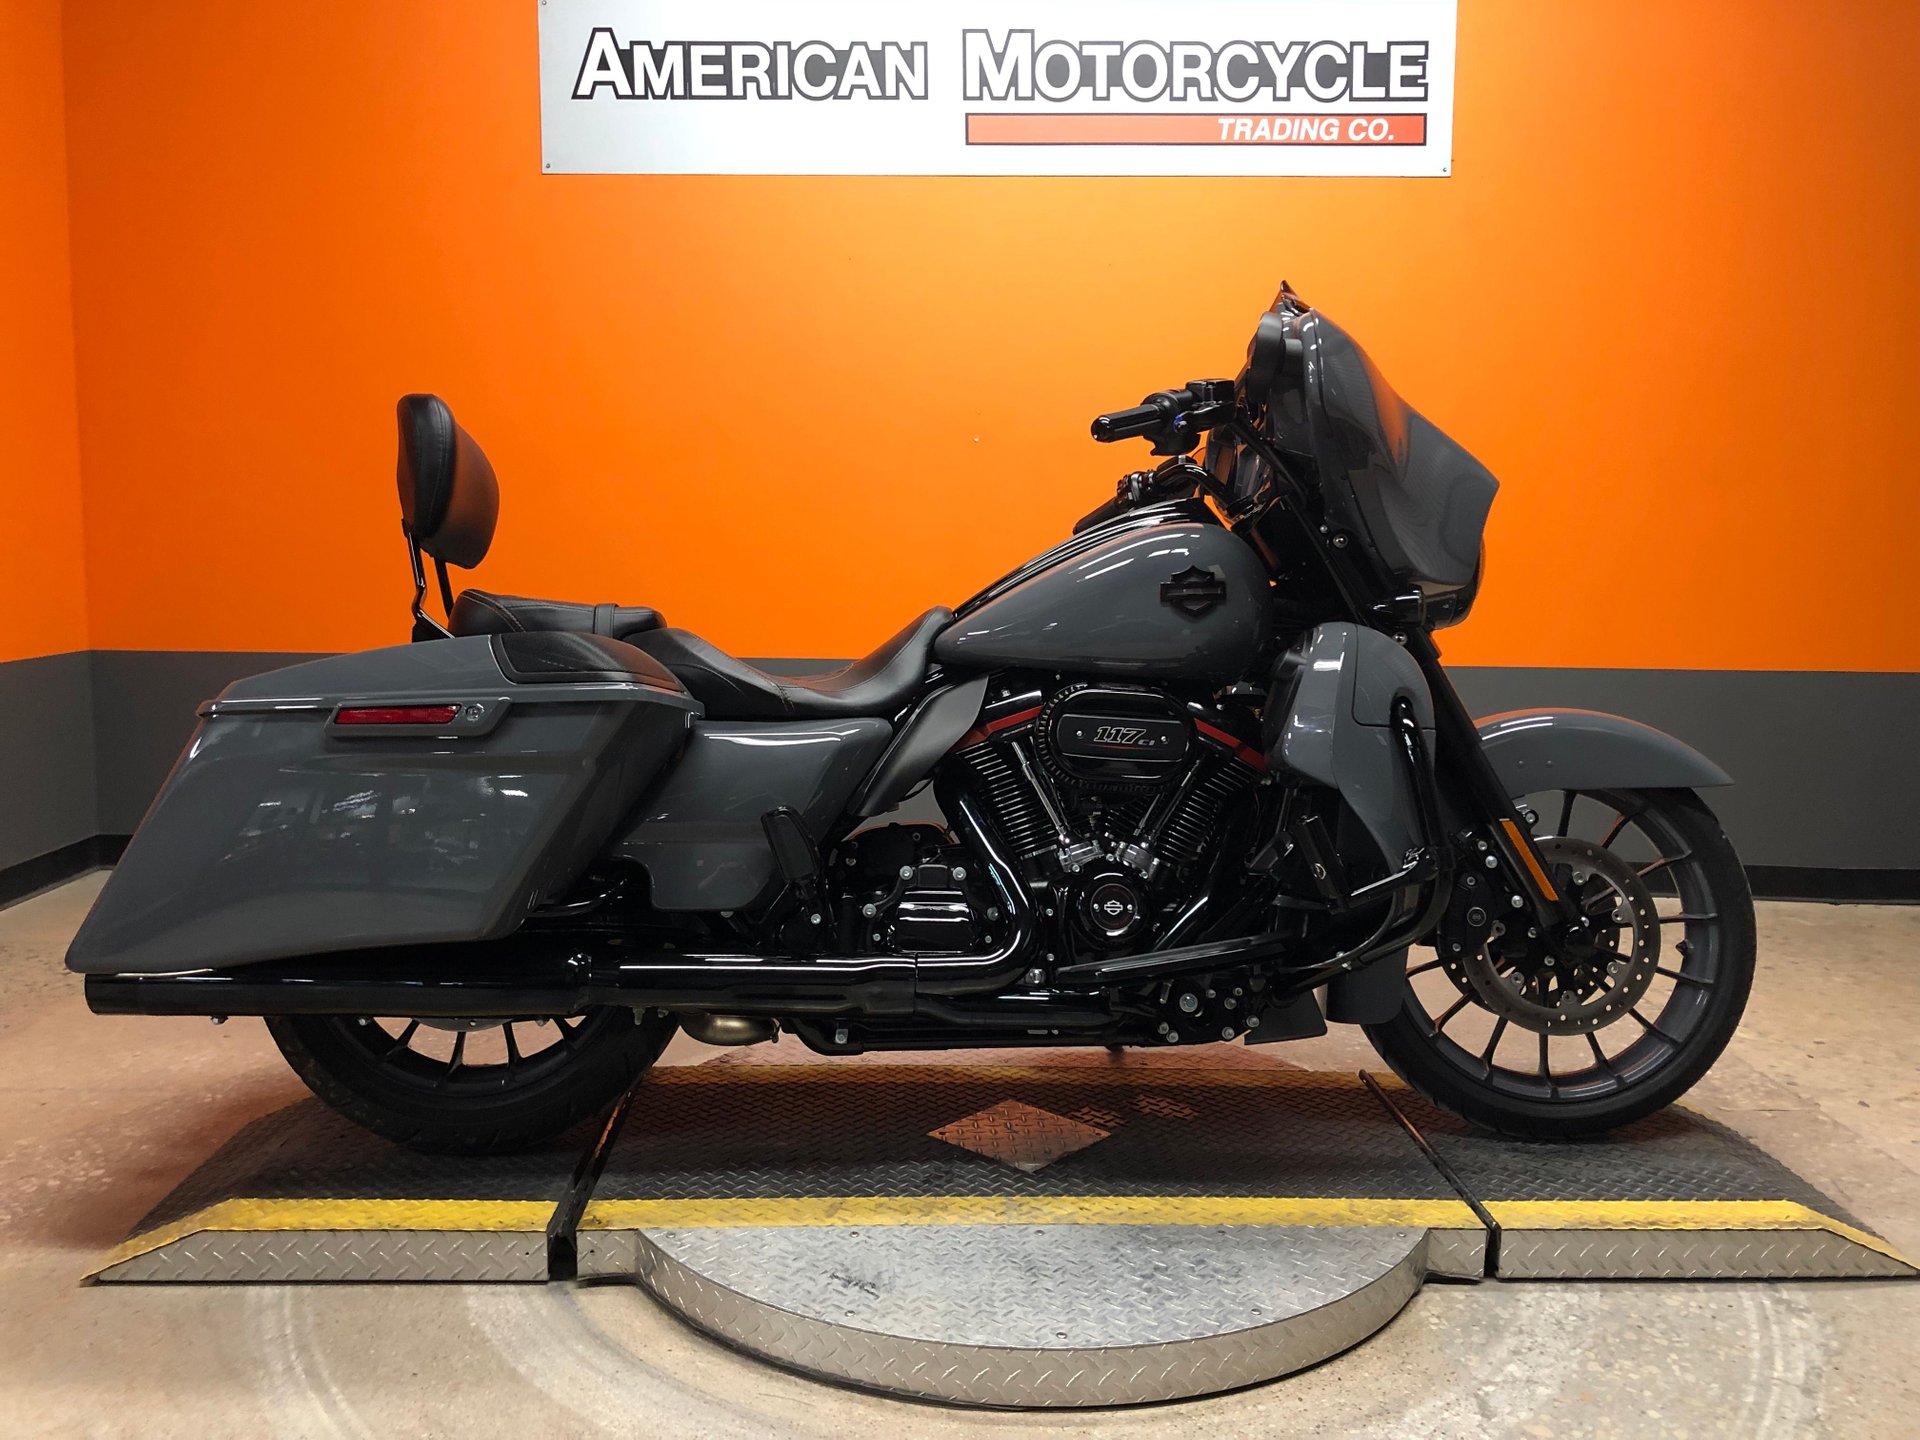 2018 Harley Davidson Cvo Street Glide American Motorcycle Trading Company Used Harley Davidson Motorcycles